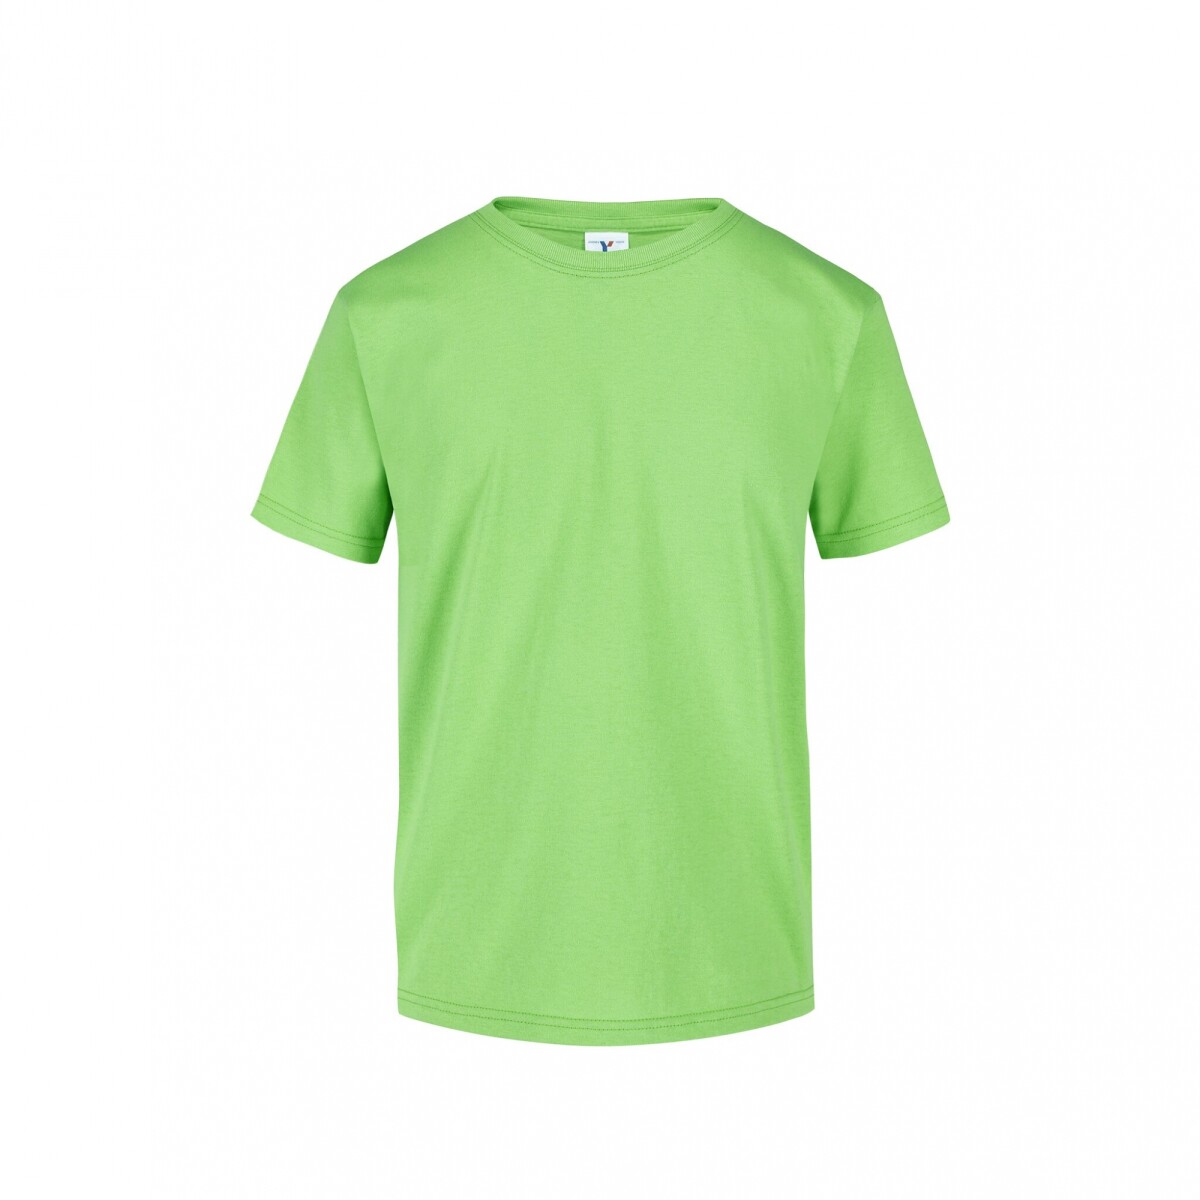 Camiseta a la base niño - Verde lima 